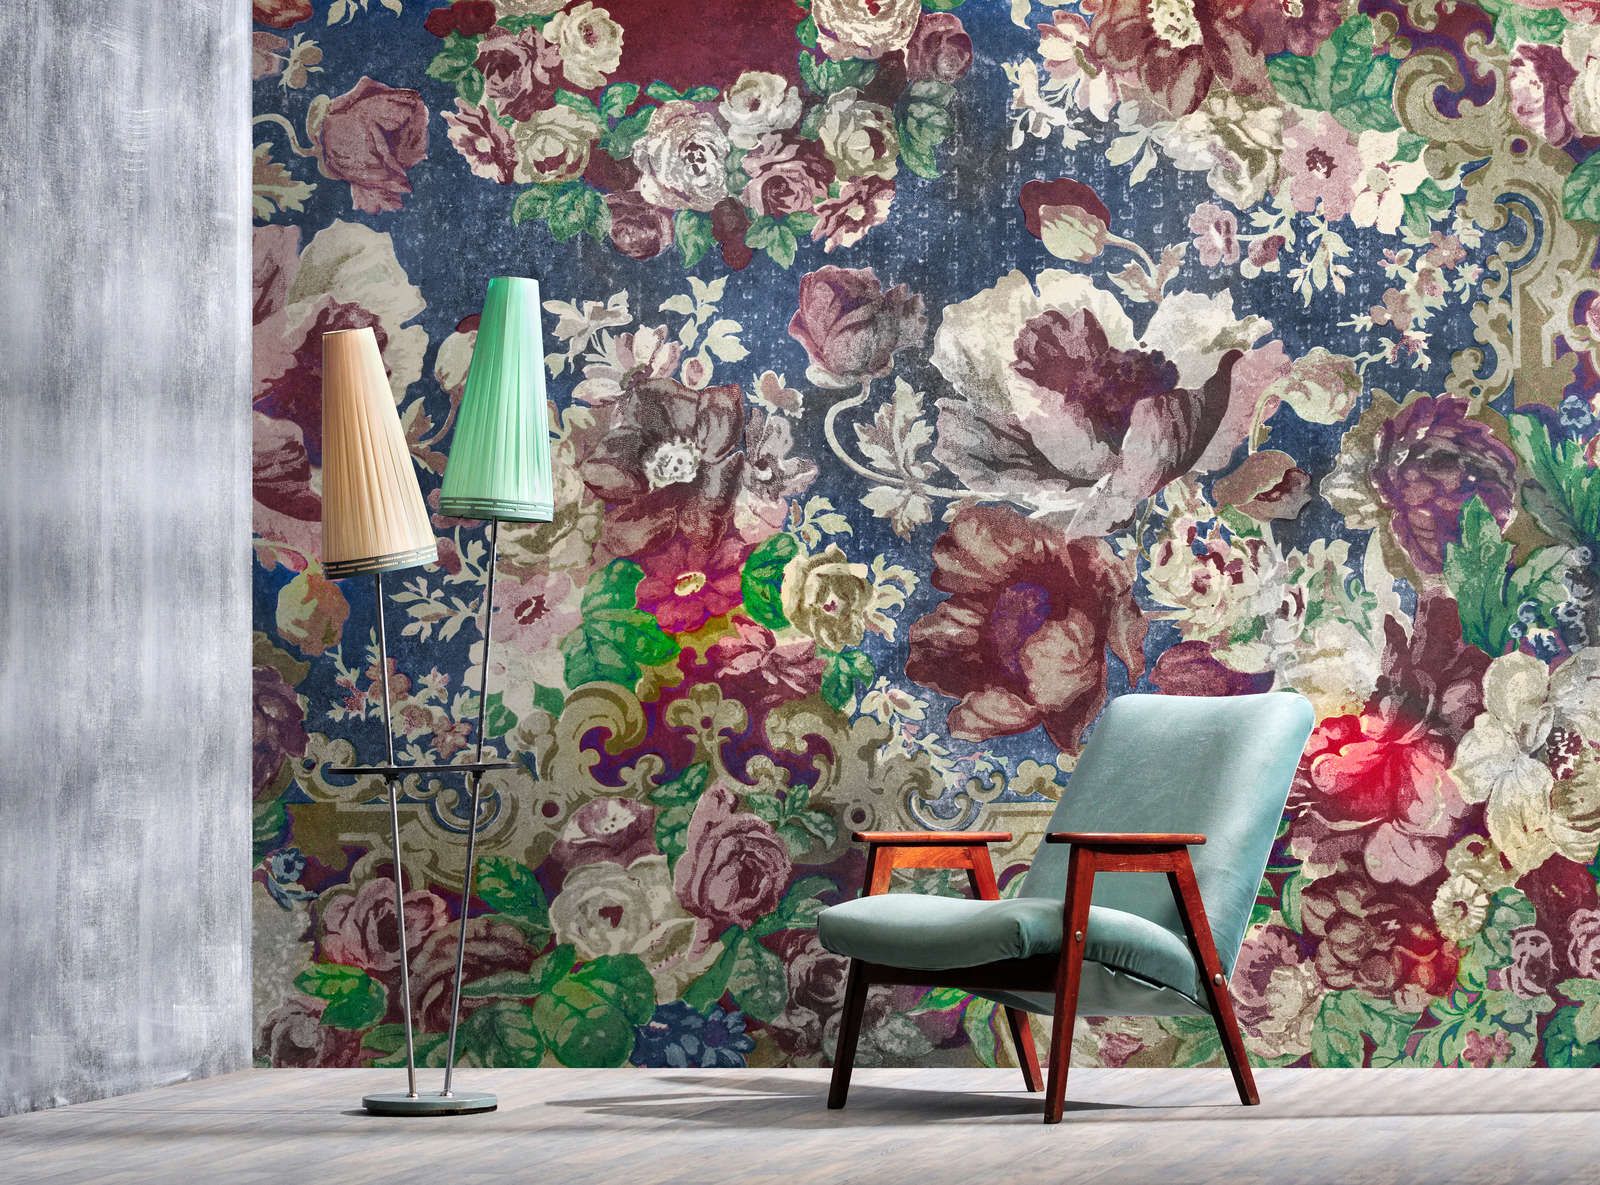             Digital behang »carmente 2« - Klassiek bloemenpatroon voor vintage pleisterstructuur - Bont | Glad, licht parelmoerglanzend vlies
        